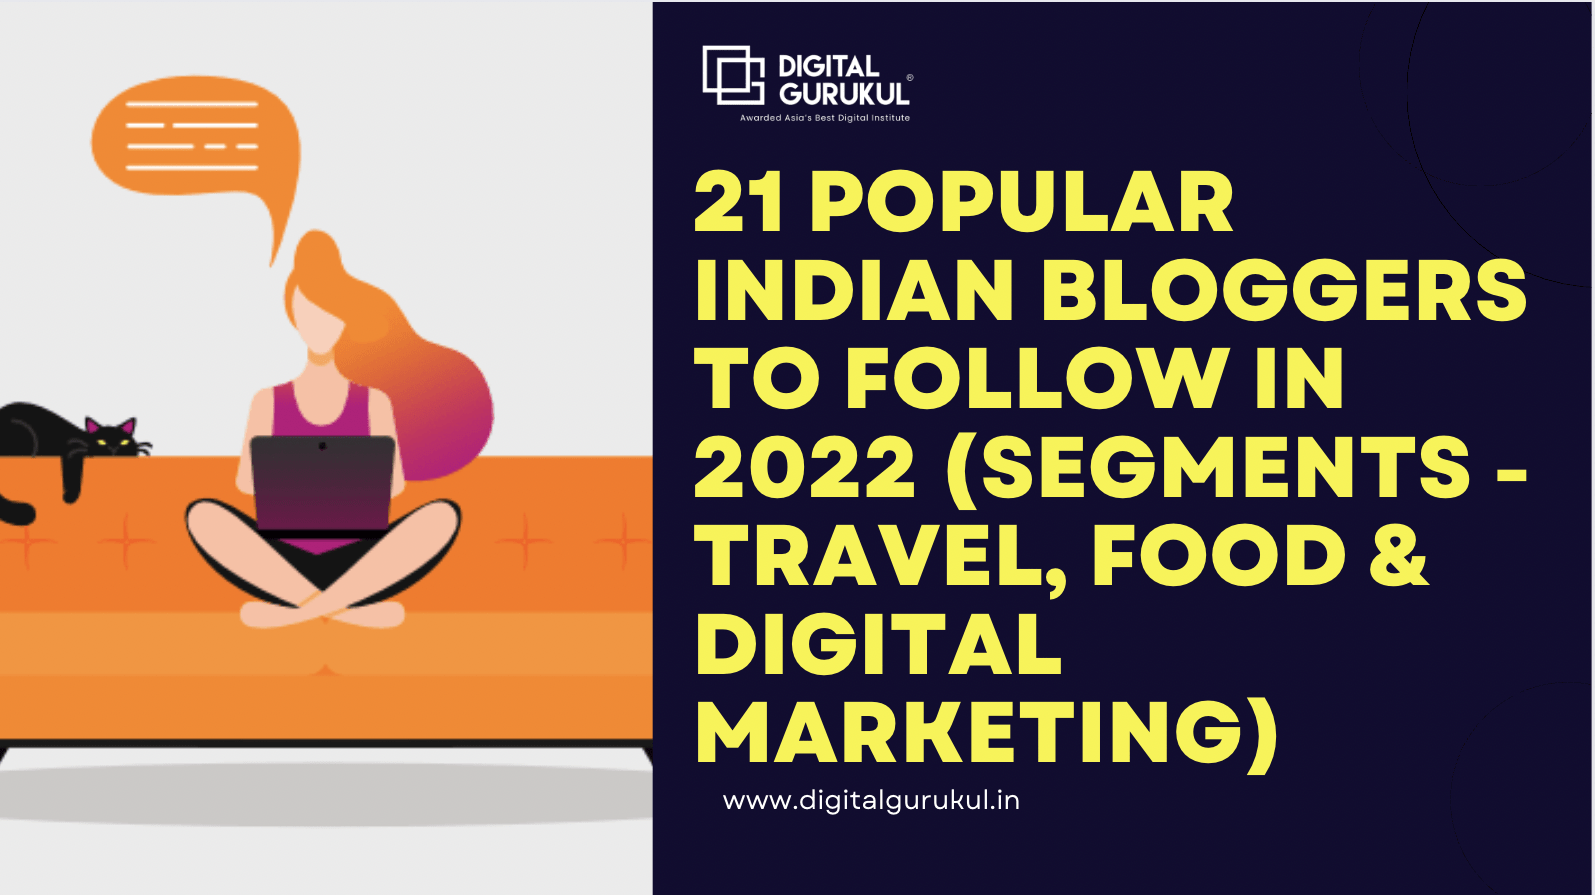 21 Popular Indian Bloggers to follow in 2022 (Segments - Travel, Food & Digital Marketing)